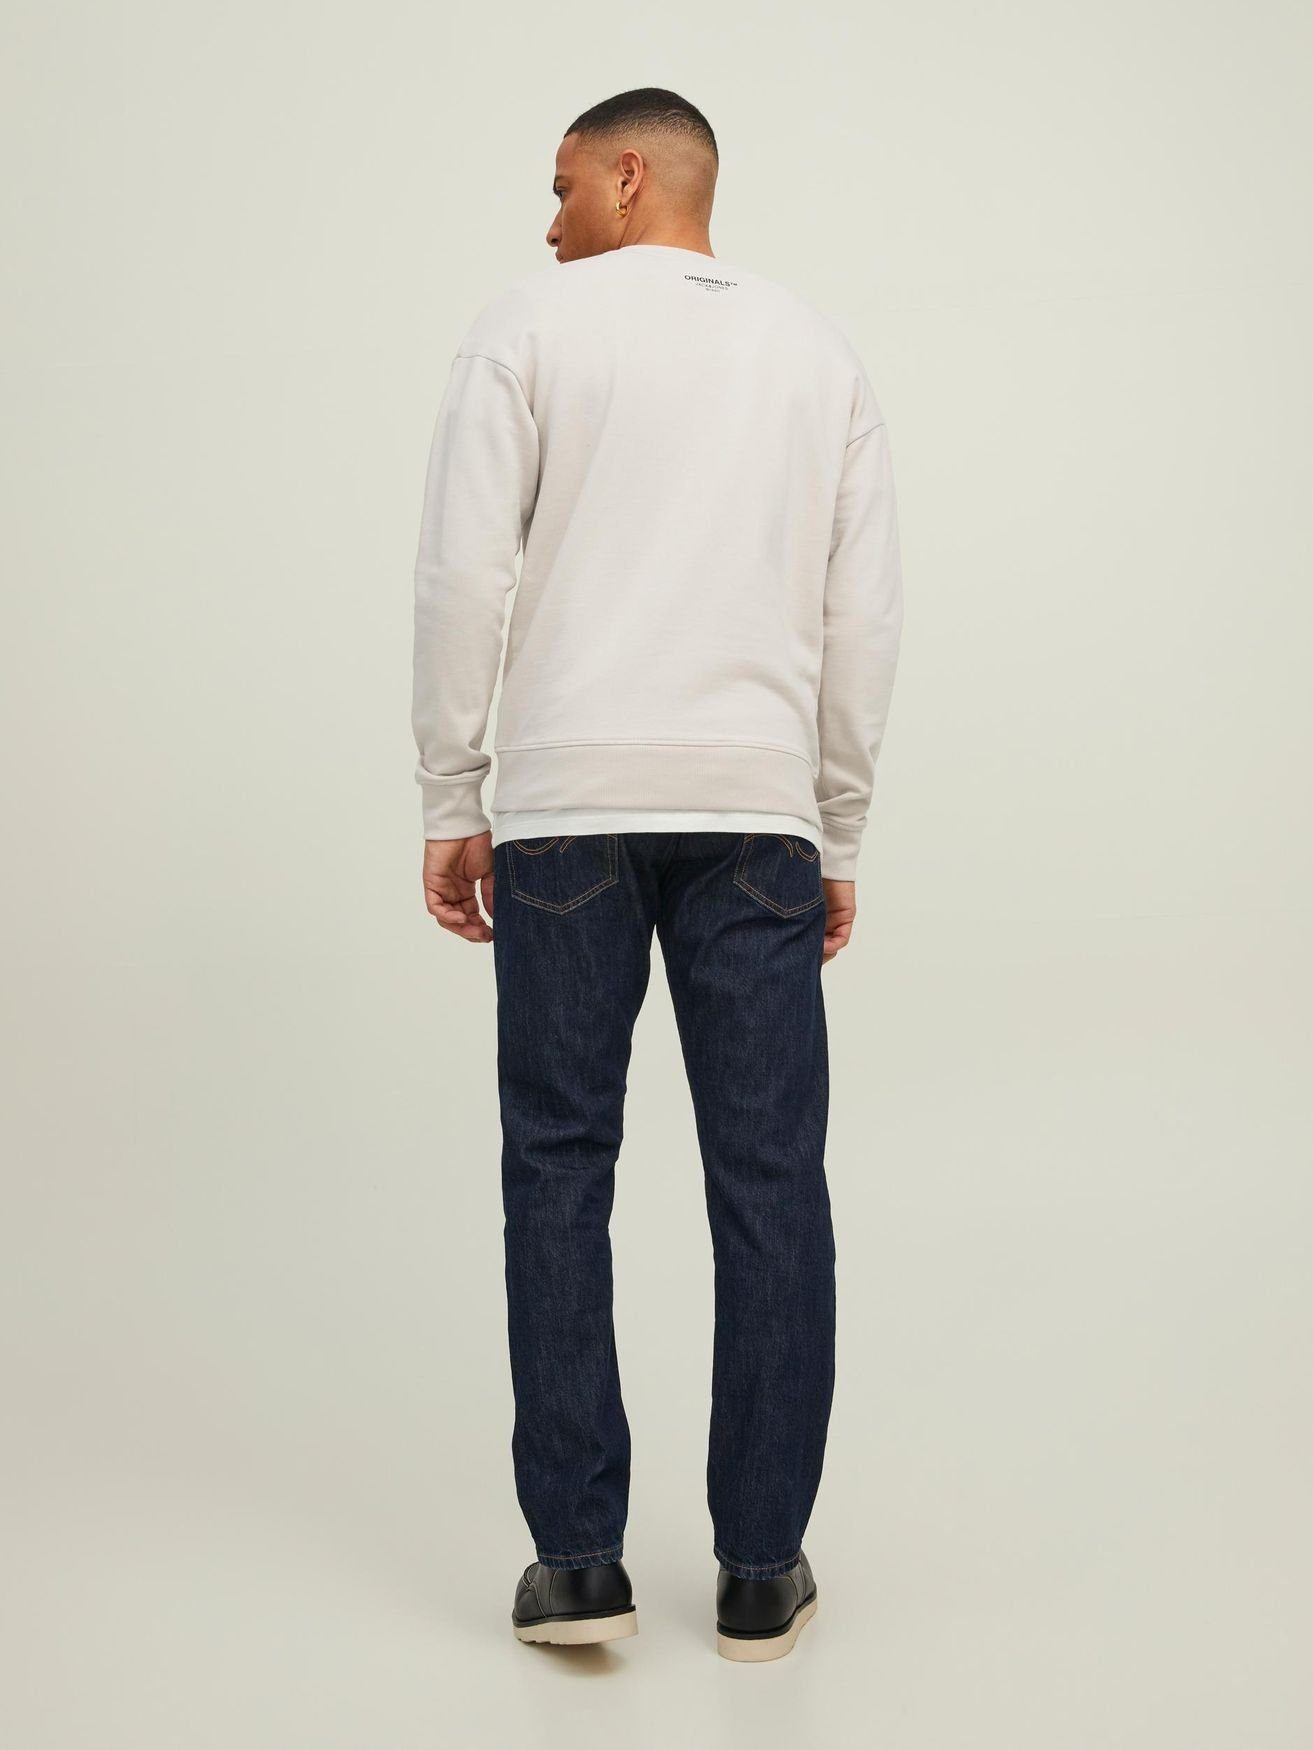 Jack & Jones Sweatshirt Basic in Langarm Pullover Sweater JORCLEAN 4672 Shirt Rundhals Sand